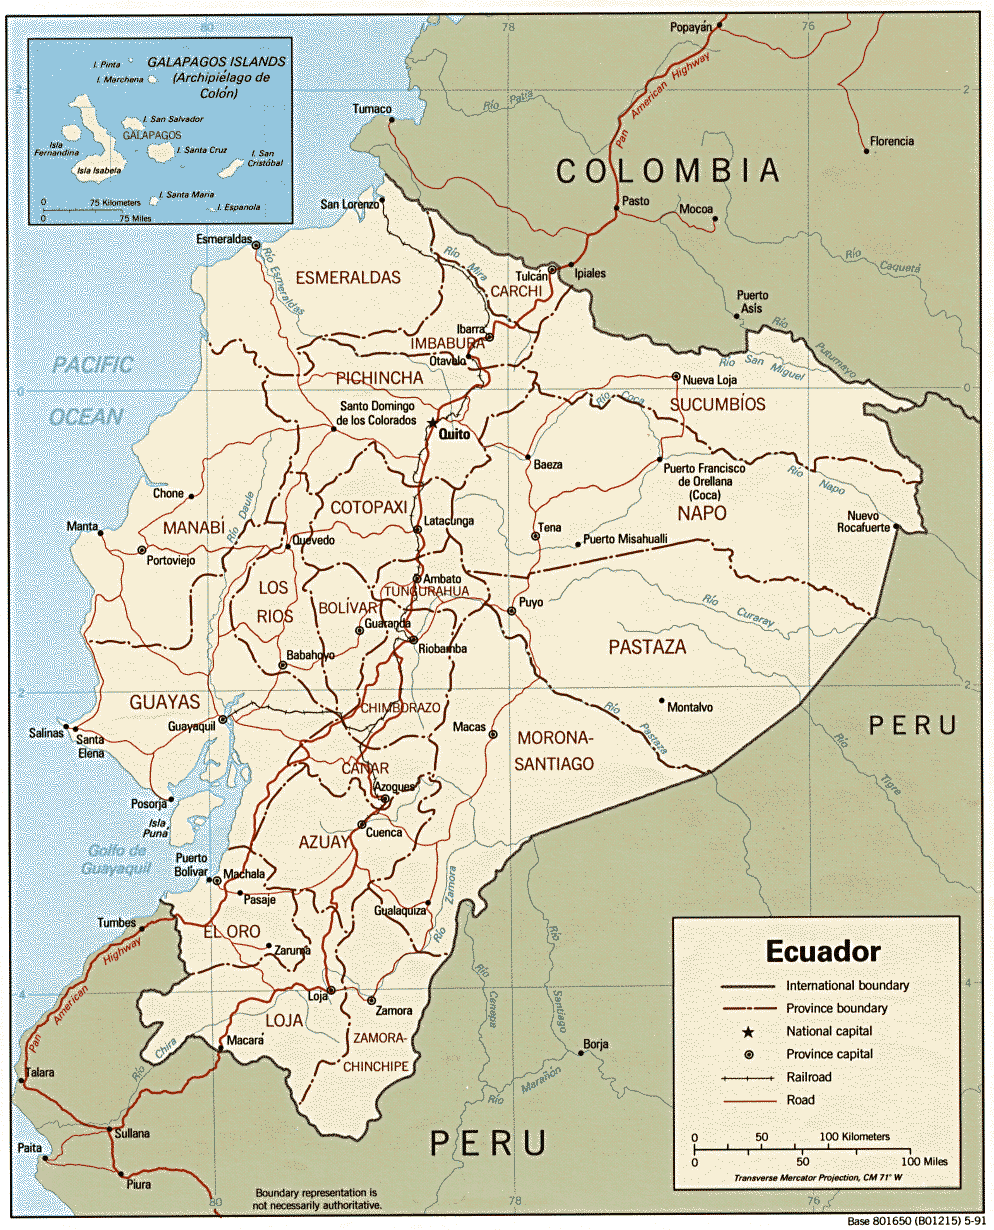 http://www.lib.utexas.edu/maps/americas/ecuador.gif